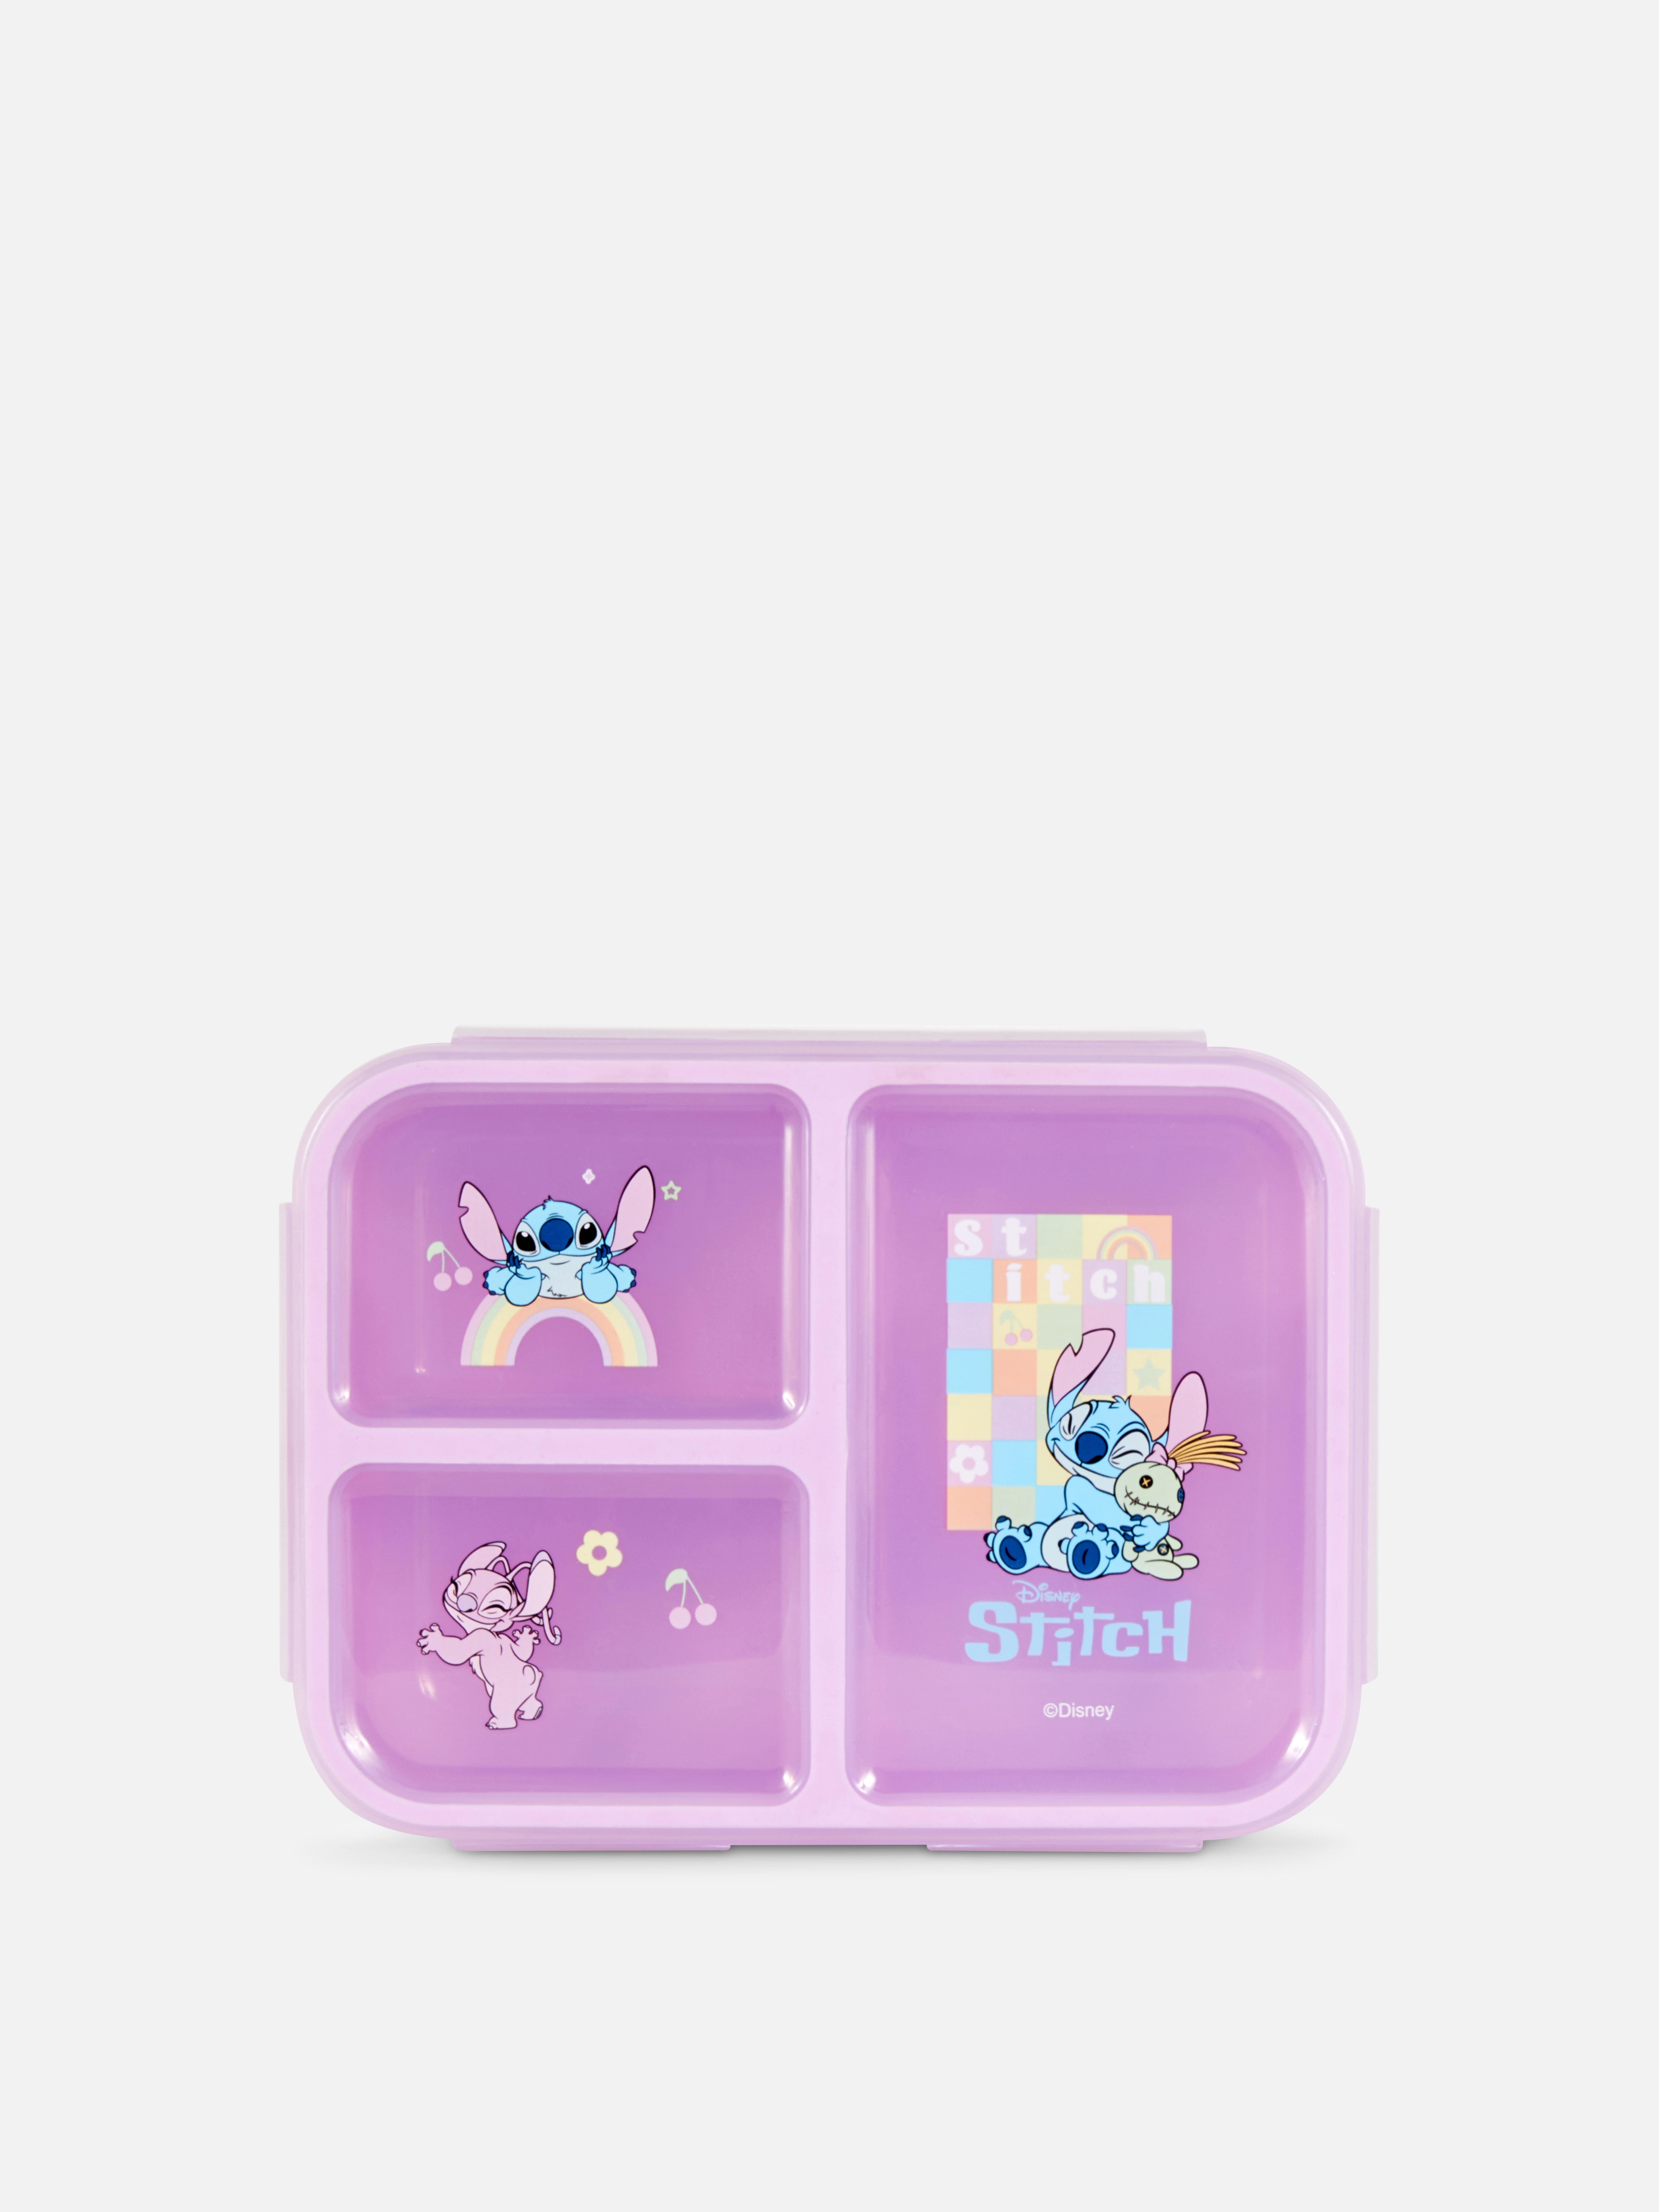 Disney's Lilo & Stitch Bento Box